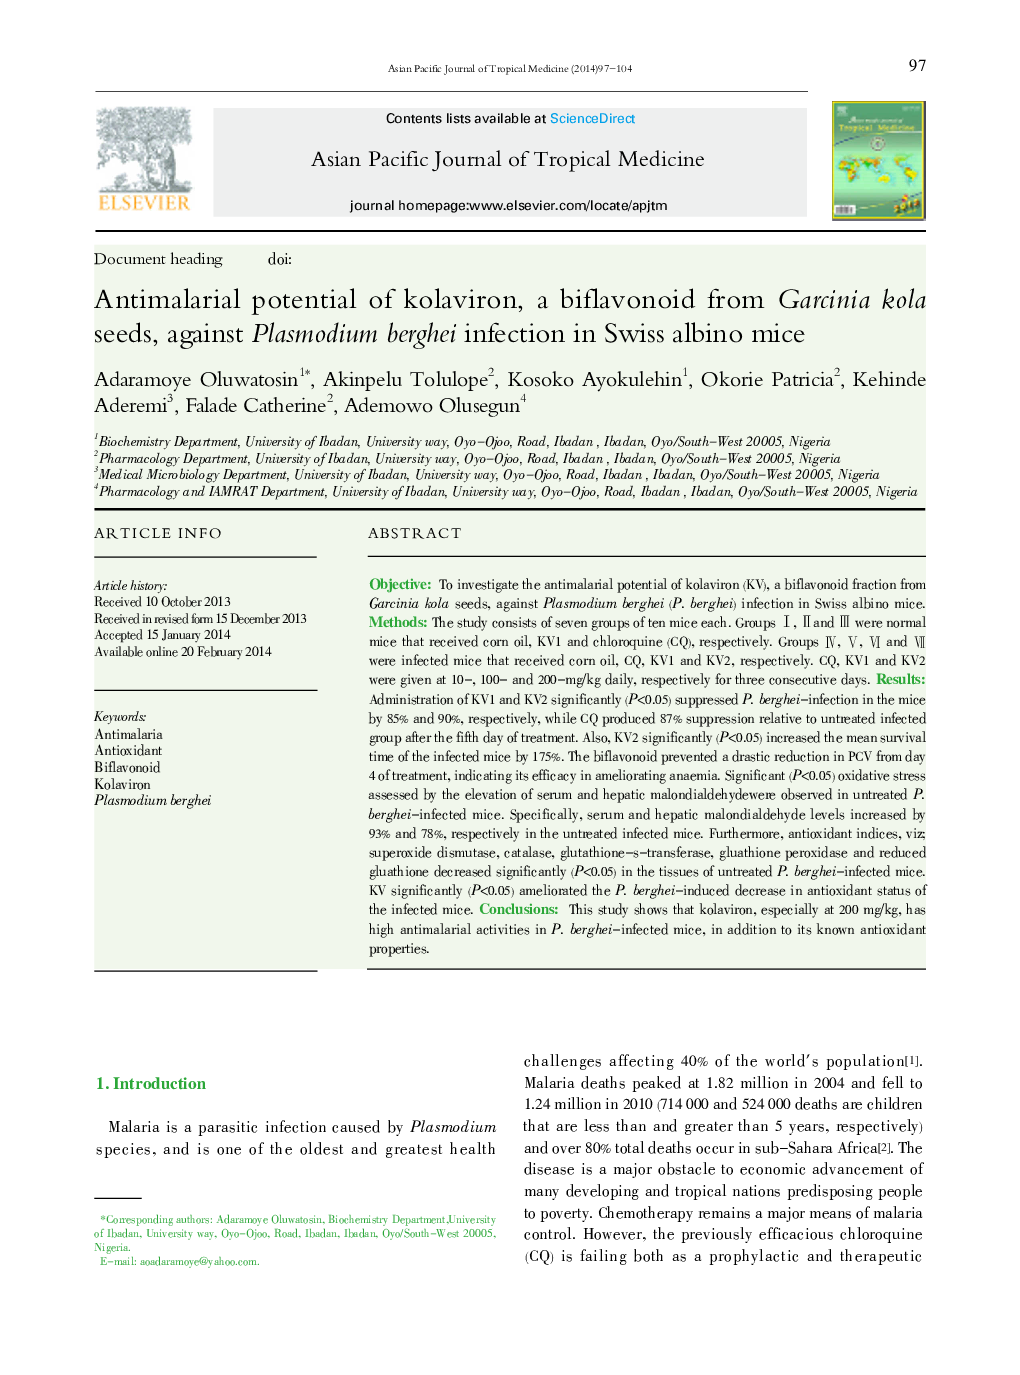 Antimalarial potential of kolaviron, a biflavonoid from Garcinia kola seeds, against Plasmodium berghei infection in Swiss albino mice 